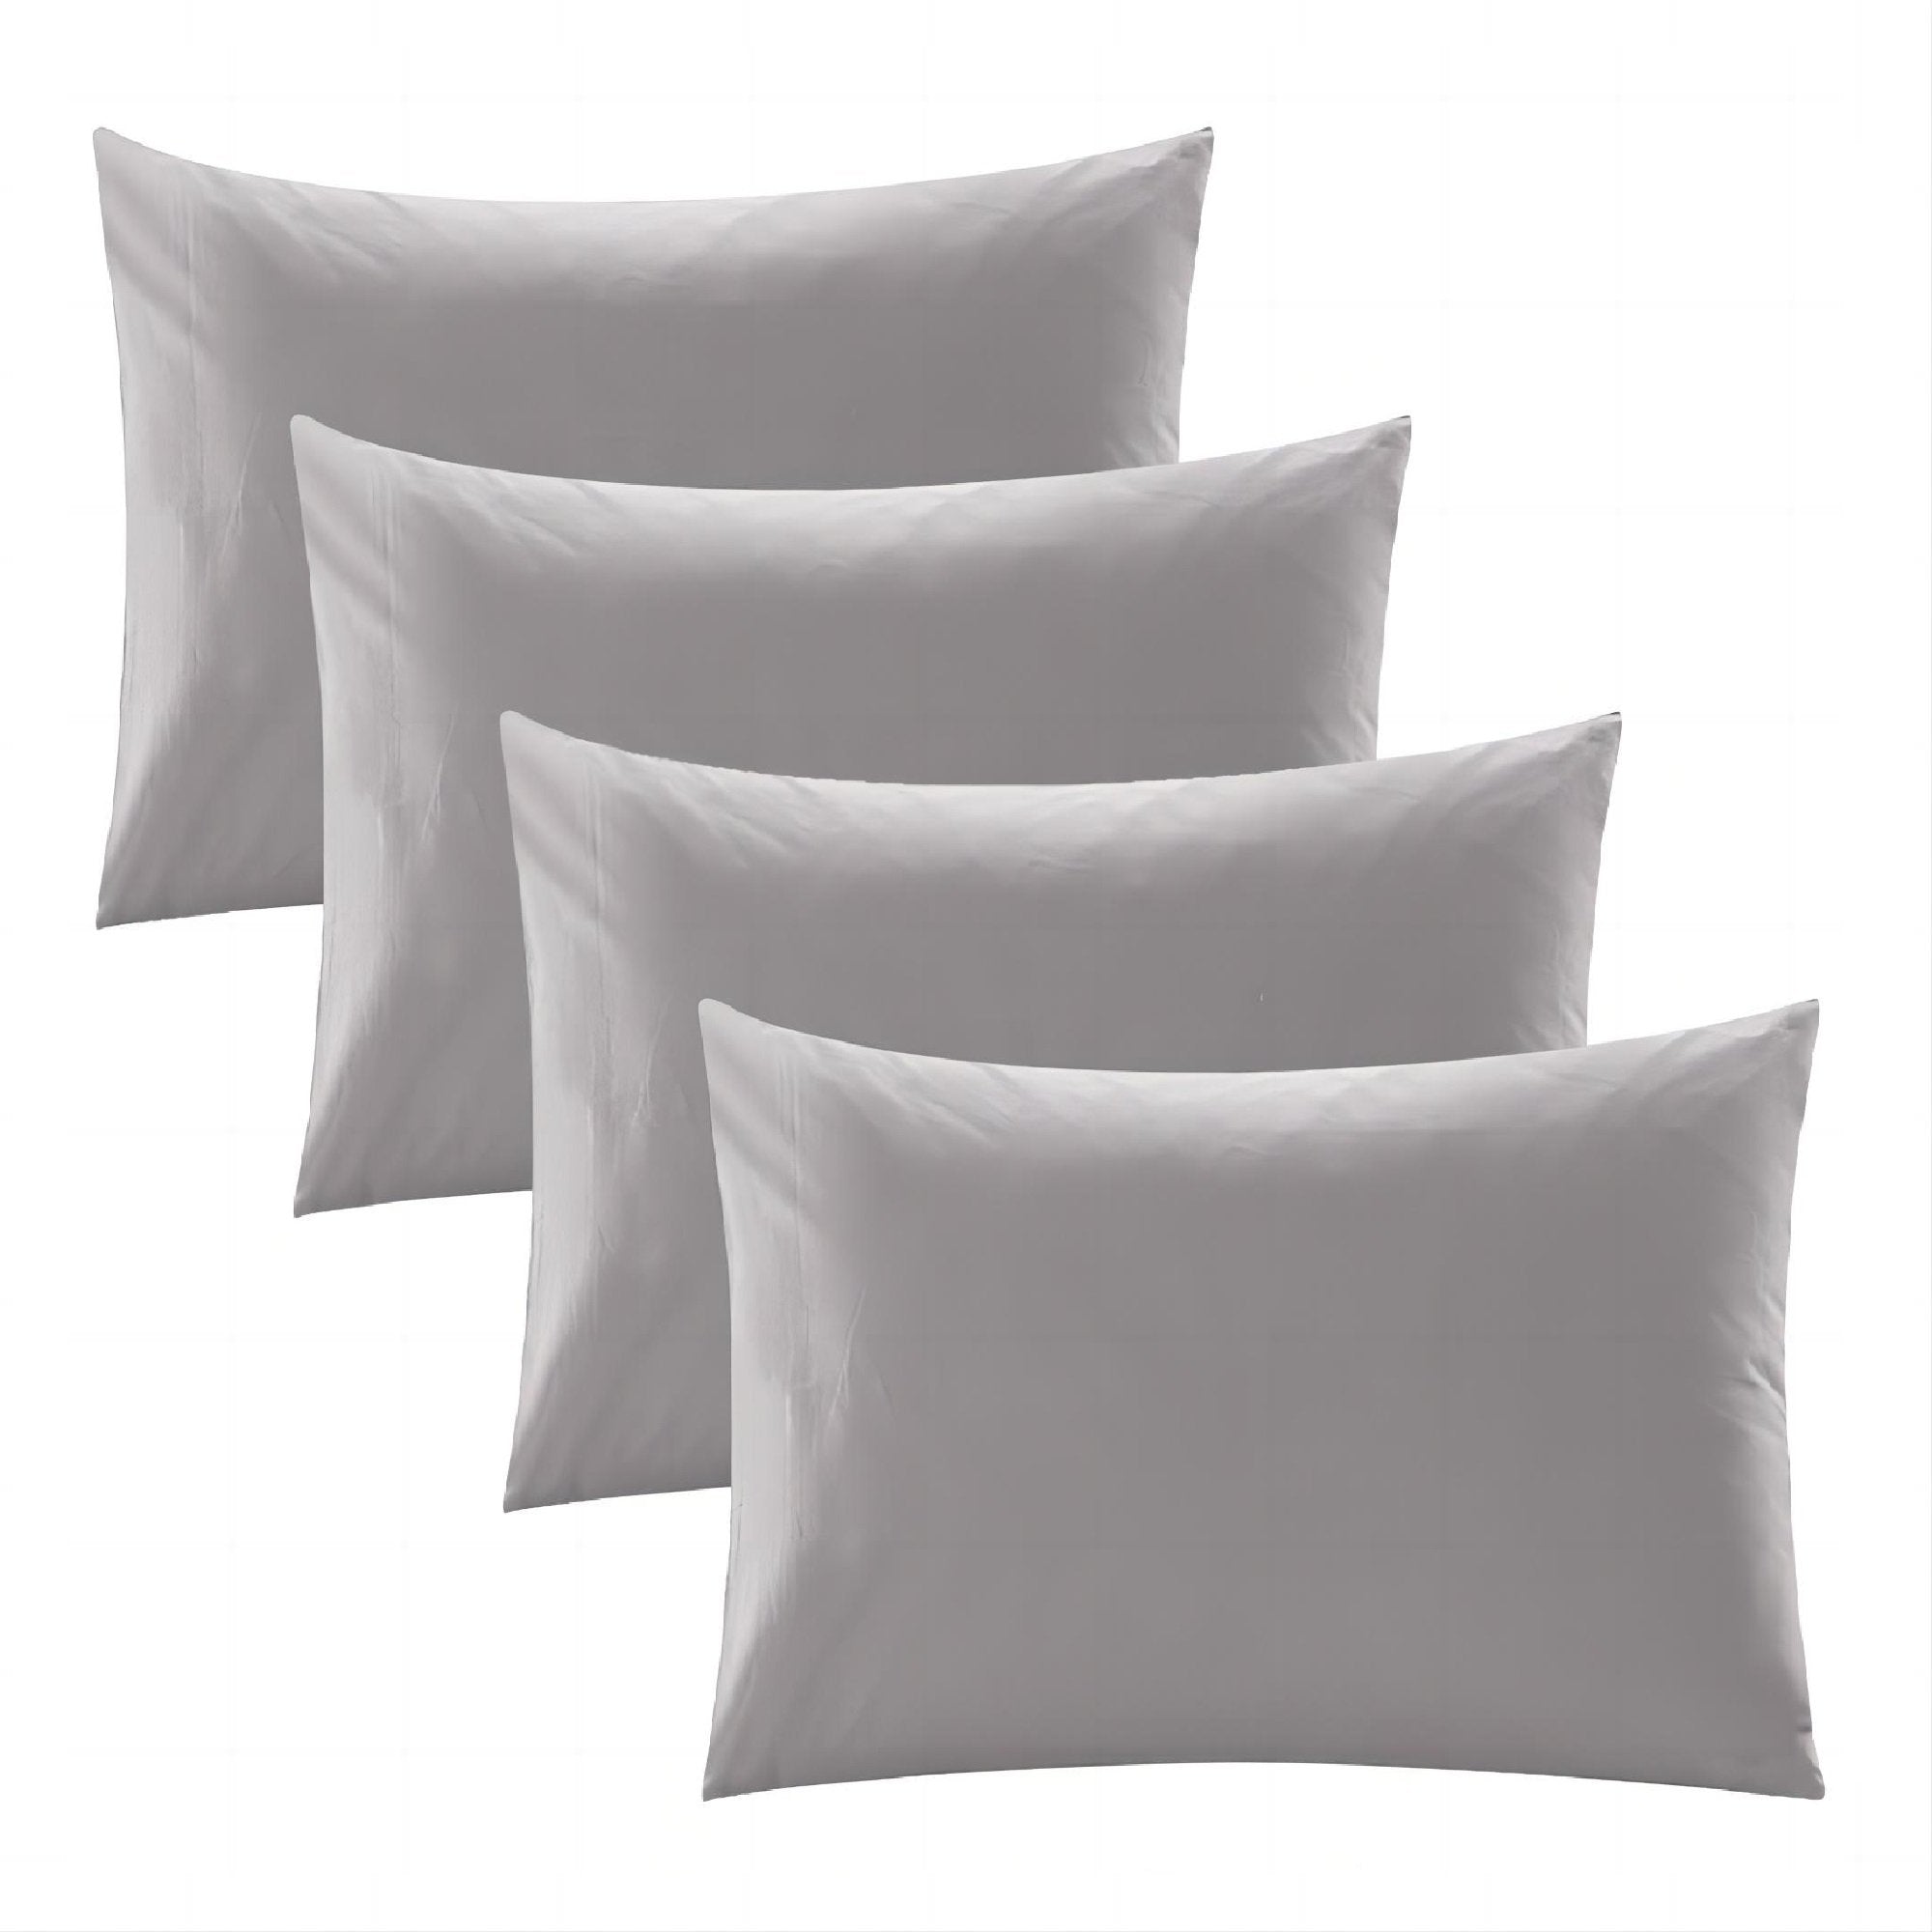 ANMINY Pillowcase set of 4 Pillow Cases-8